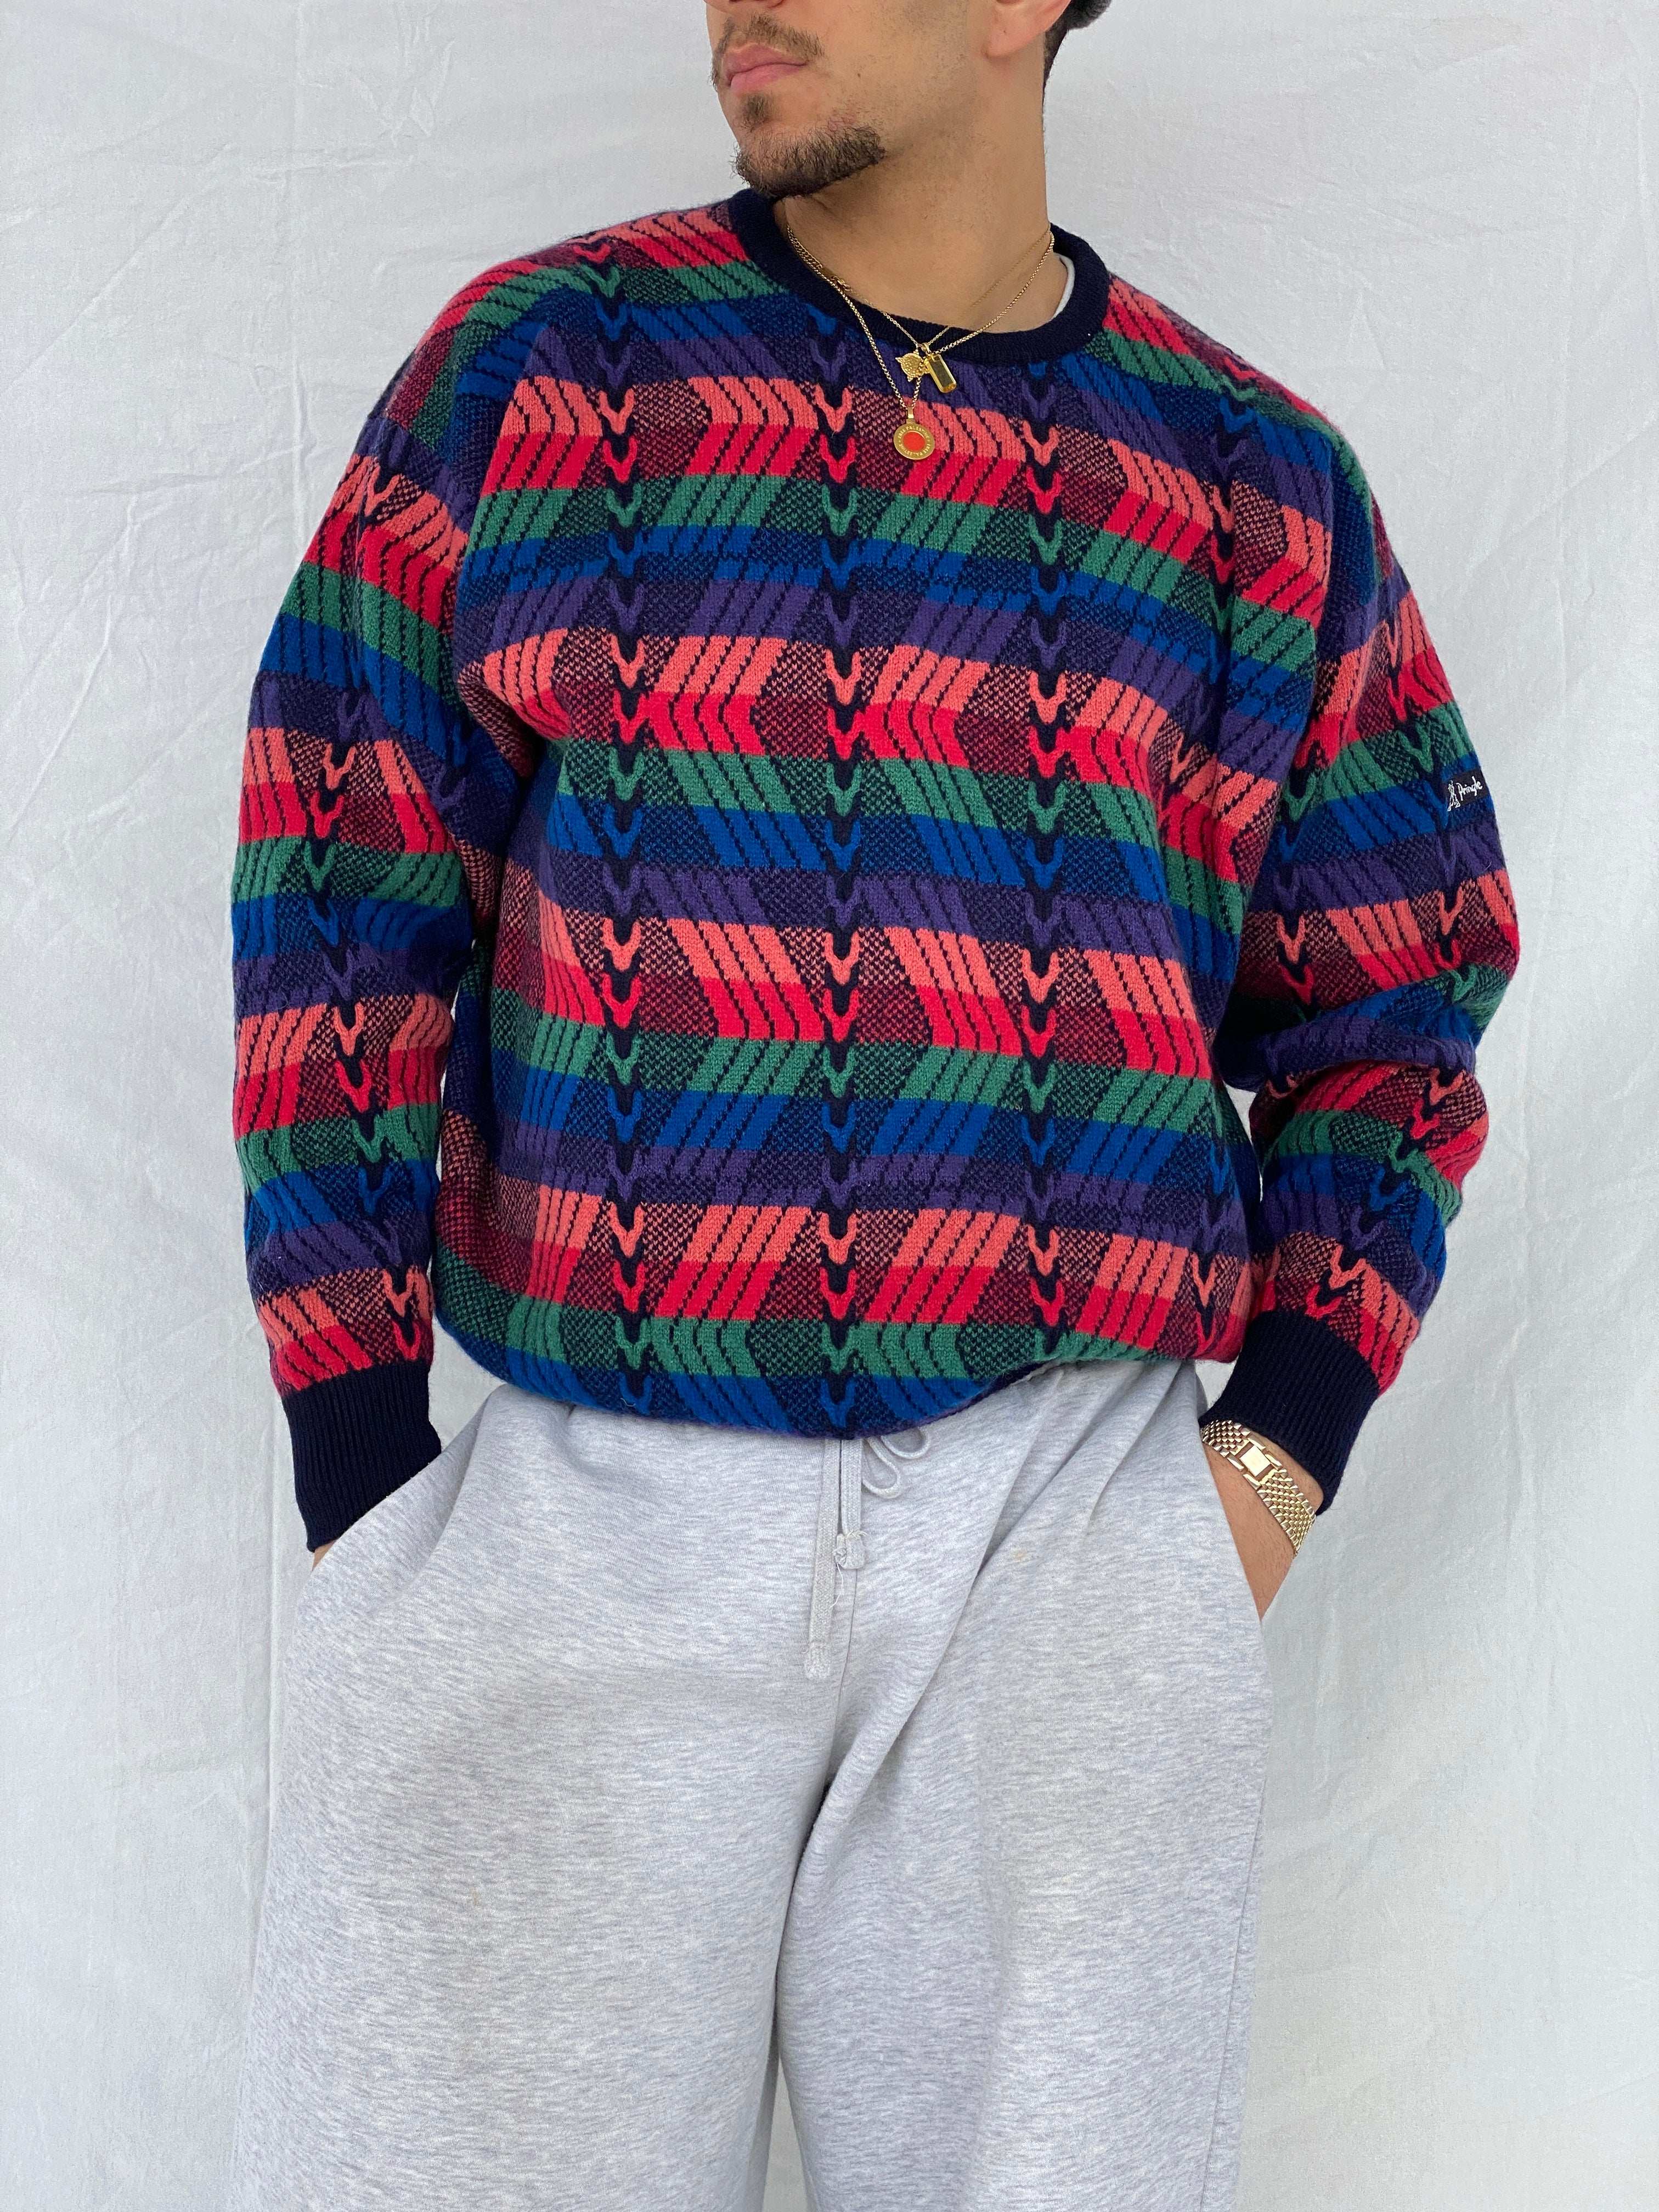 Vintage Nick Faldo Pringle Multicolored Knitted Sweater - Size M/L